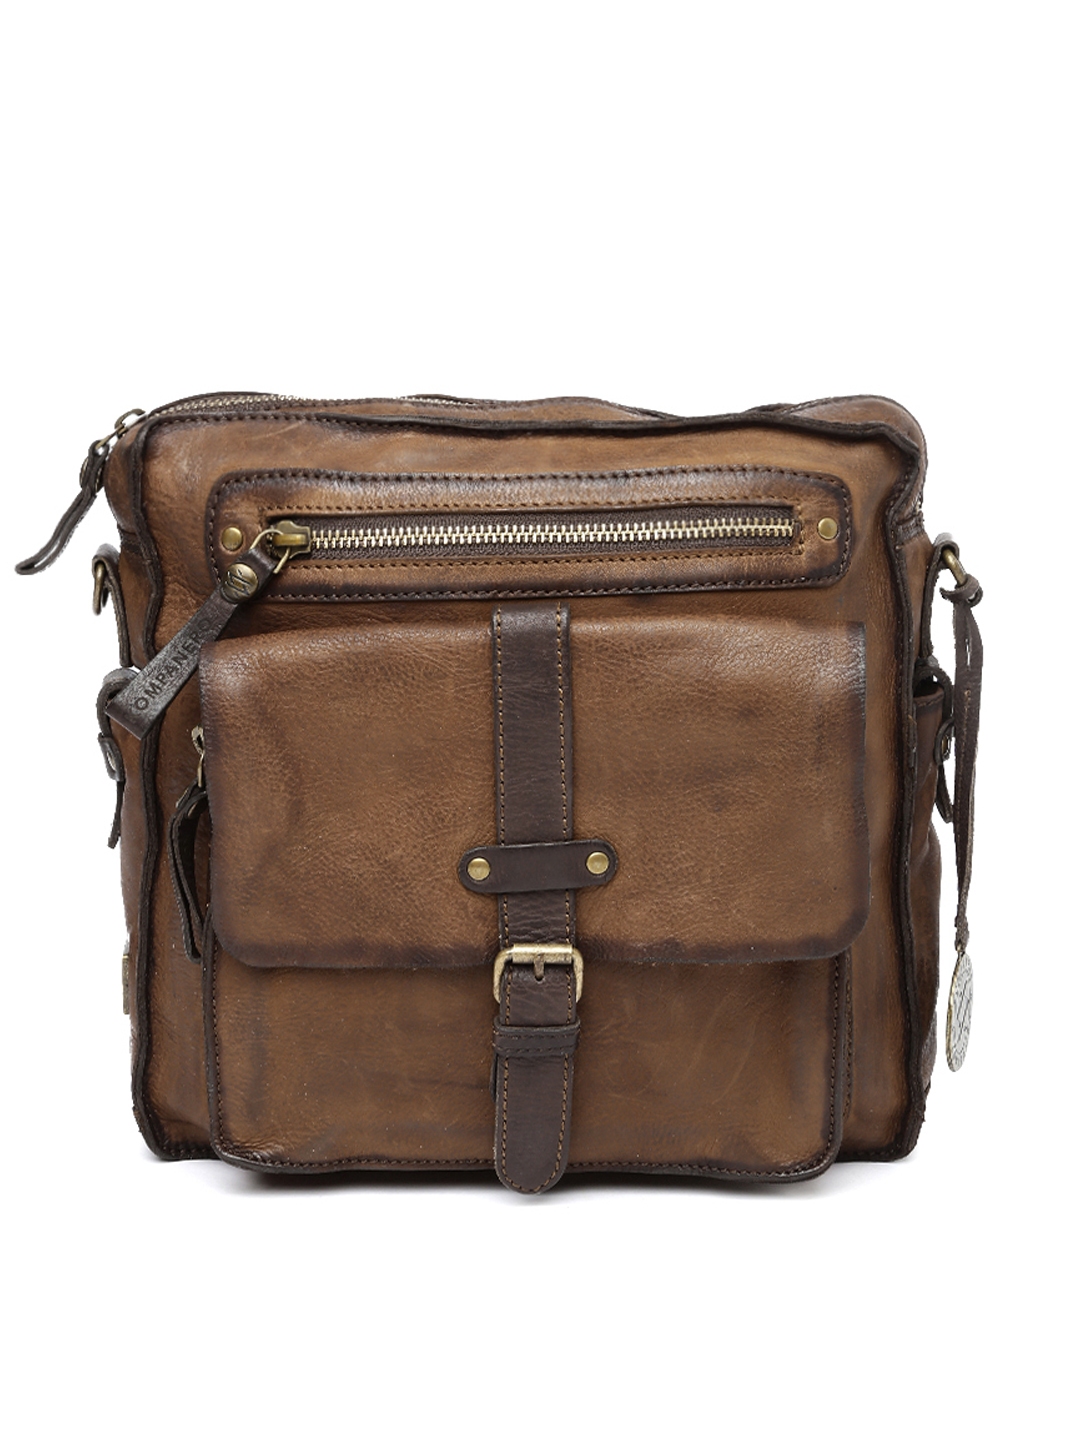 Buy KOMPANERO Men Brown Leather Messenger Bag - Messenger Bag for